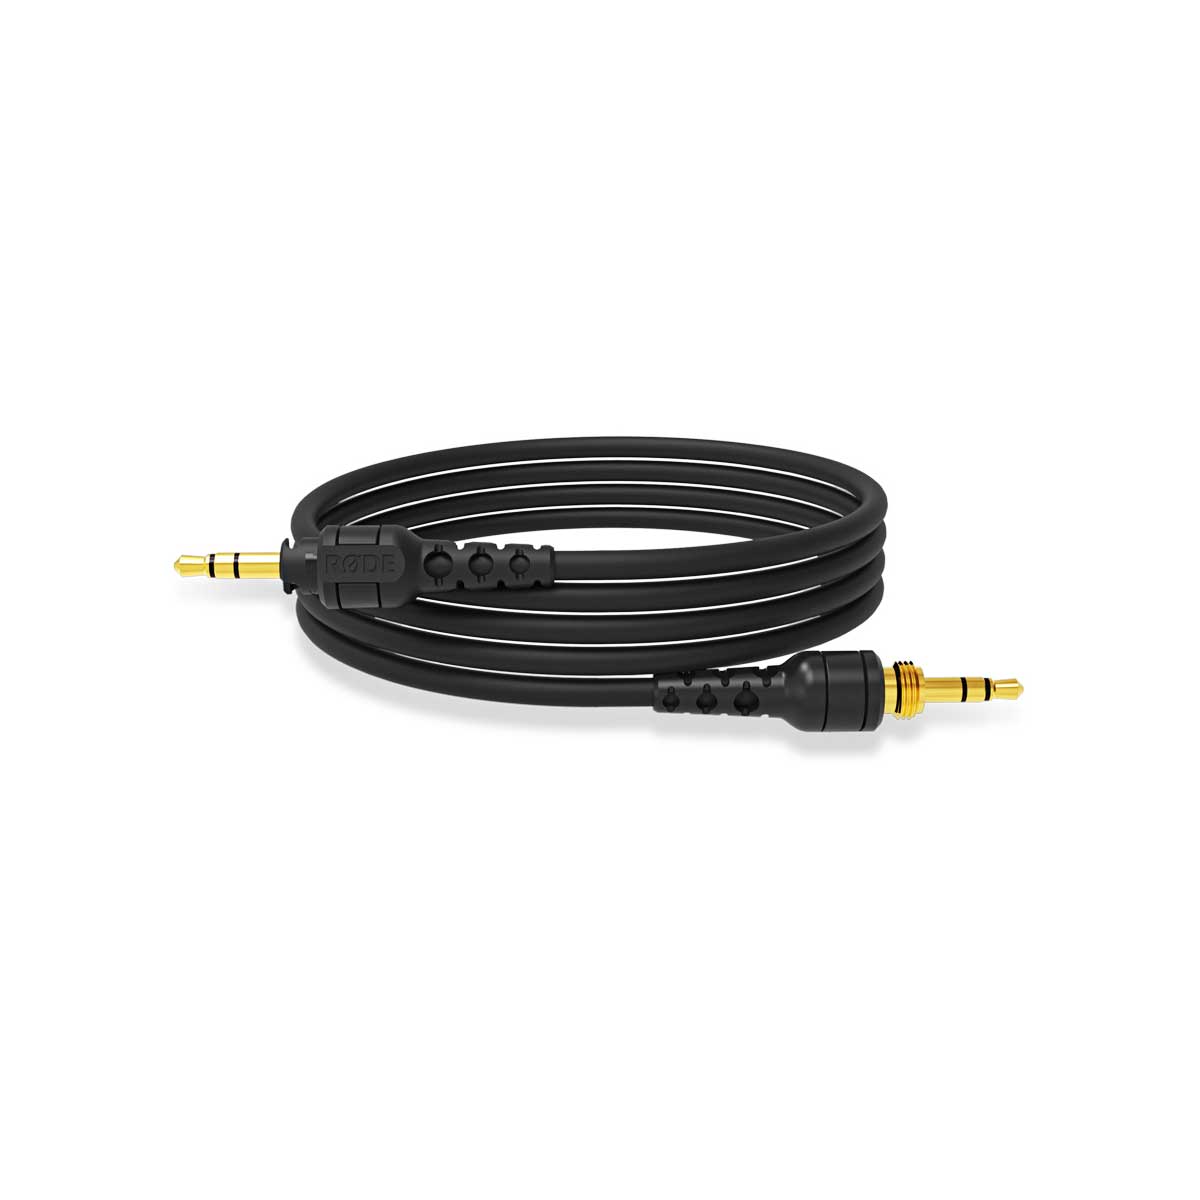 RØDE NTH-Cable for the RØDE NTH-100 headphones (Black) 1.2m